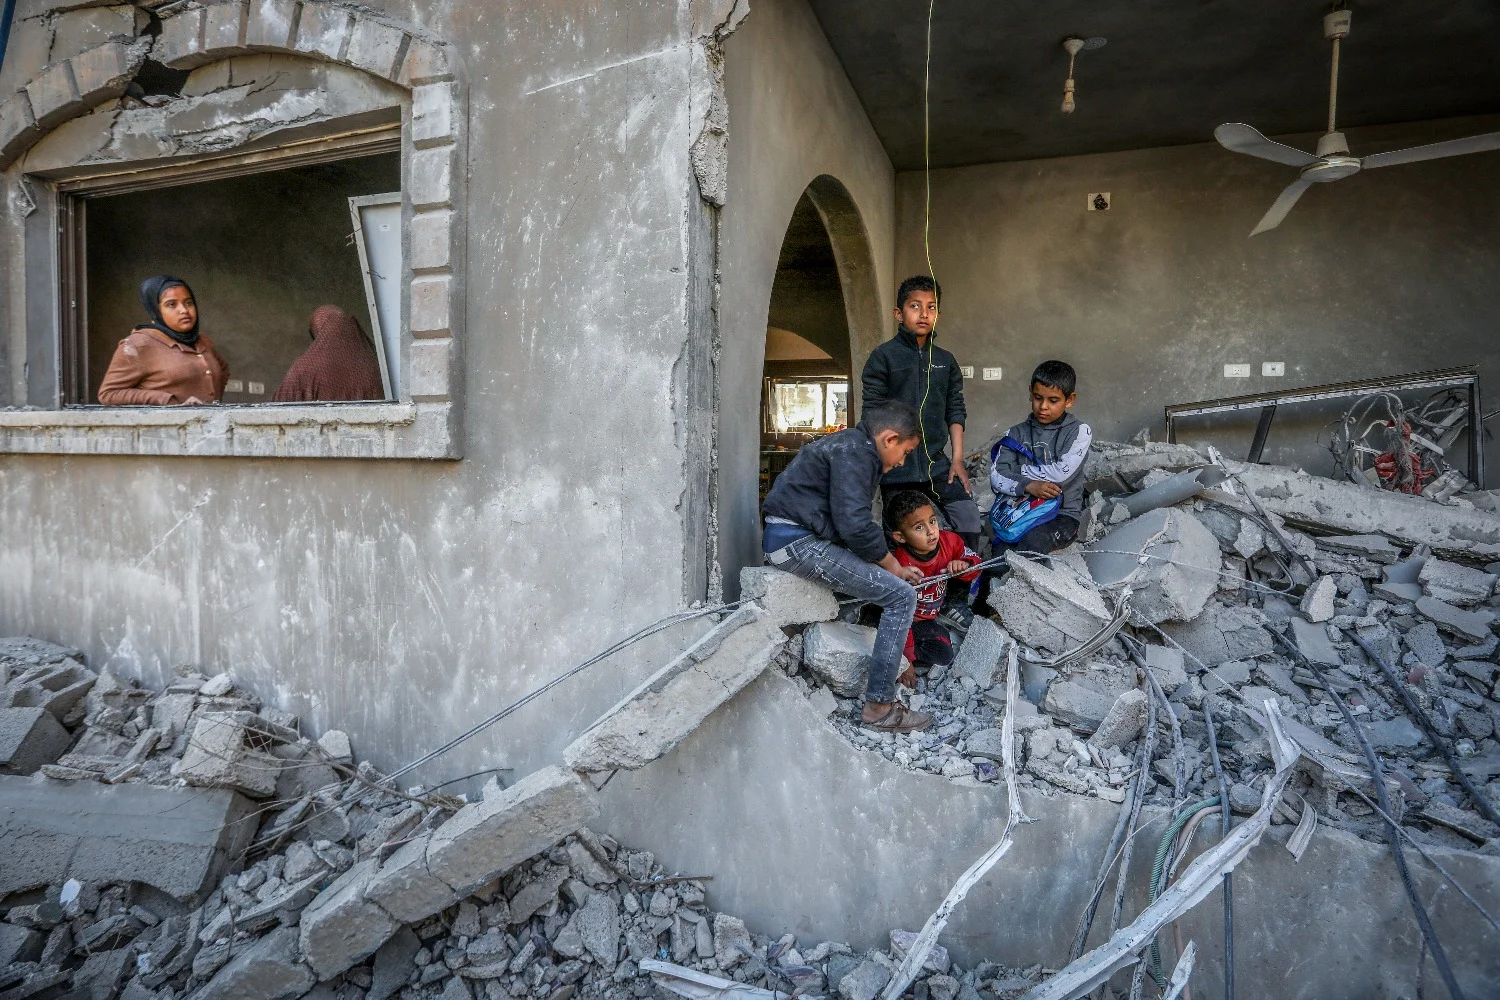 Rabbi Eliyahu Mali: “Iedereen in Gaza moet worden gedood, inclusief baby’s”